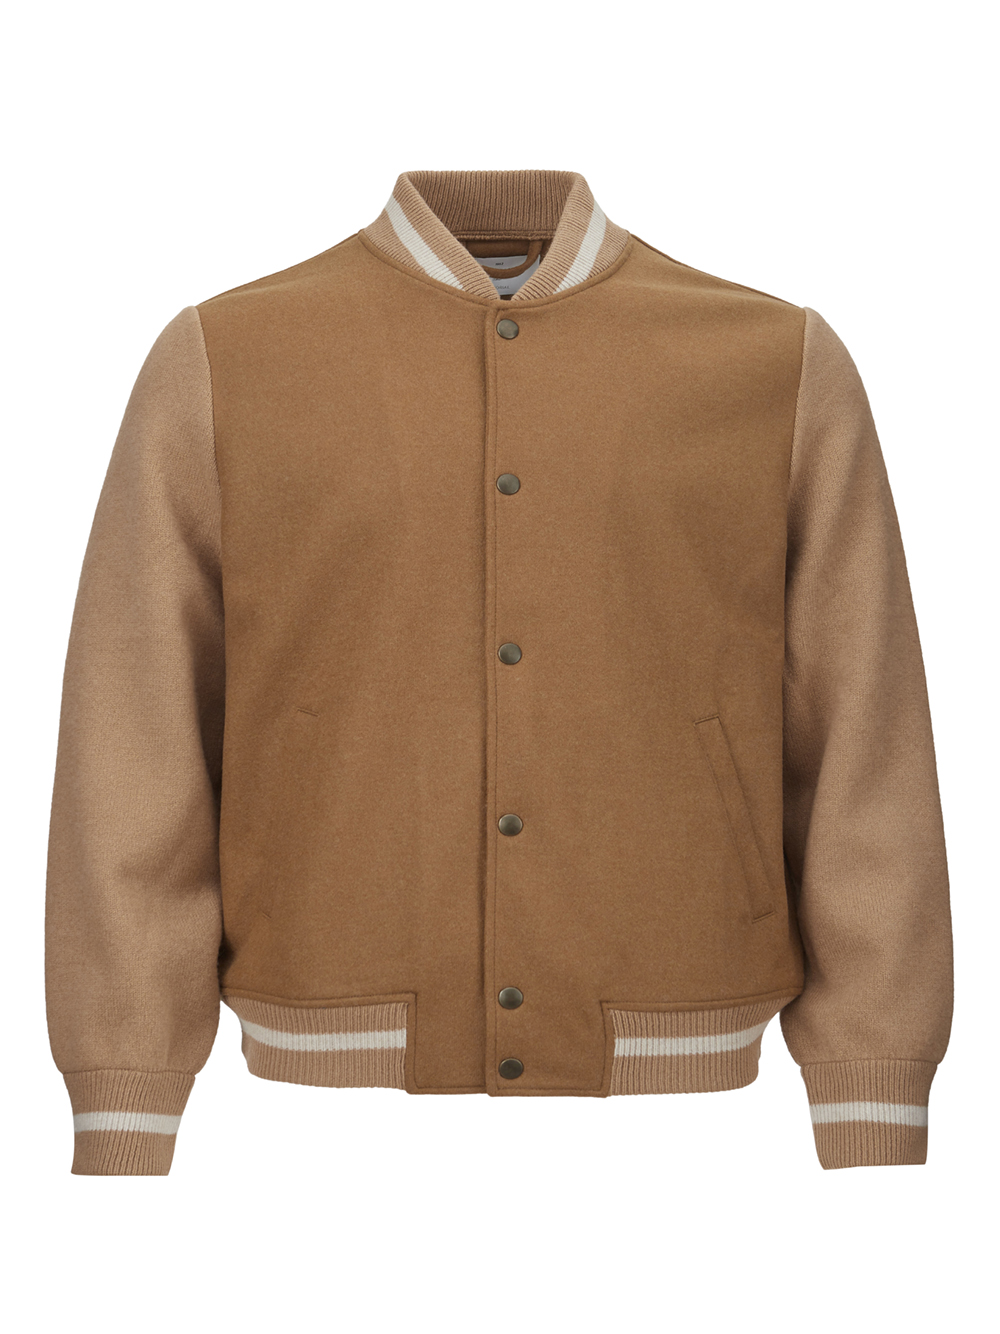 Wool Beige College Style Bomber Jacket